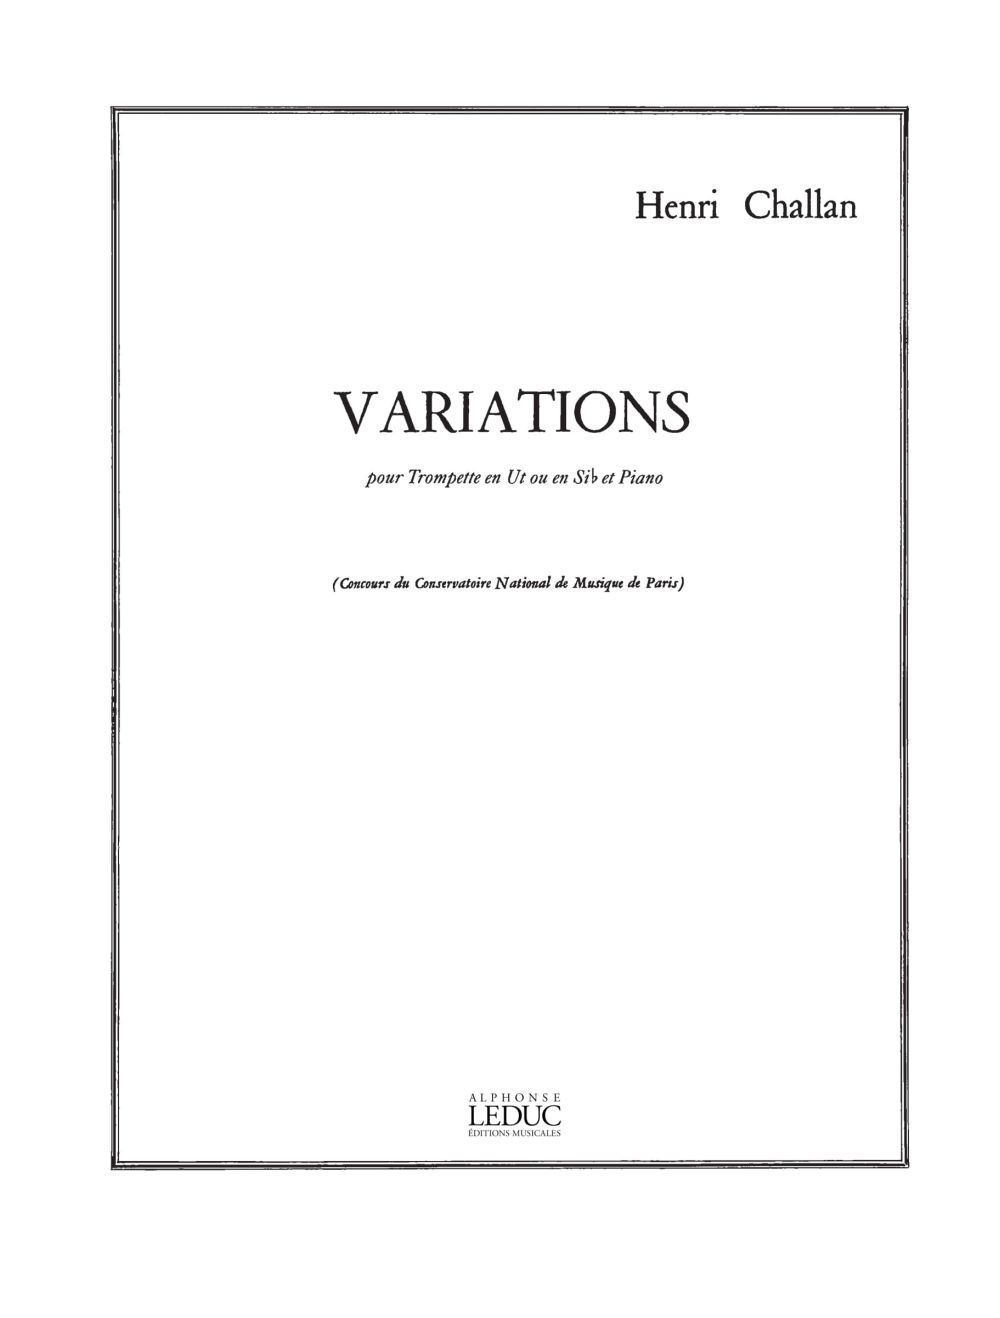 Henri Challan: Variations